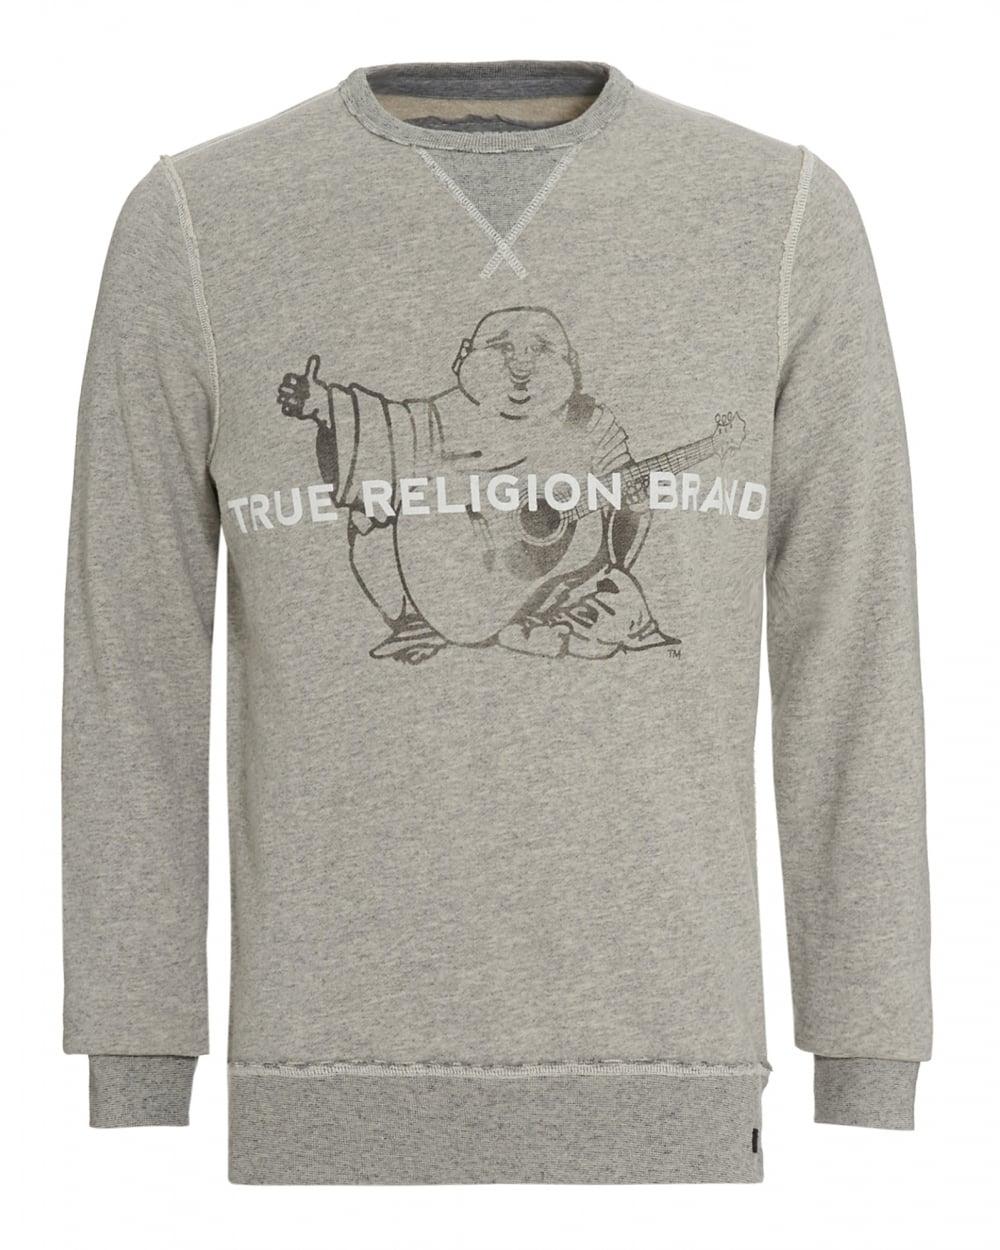 True Religion Brand Jeans Logo - True Religion Jeans Mens Sweatshirt Grey True Religion Buddha Logo